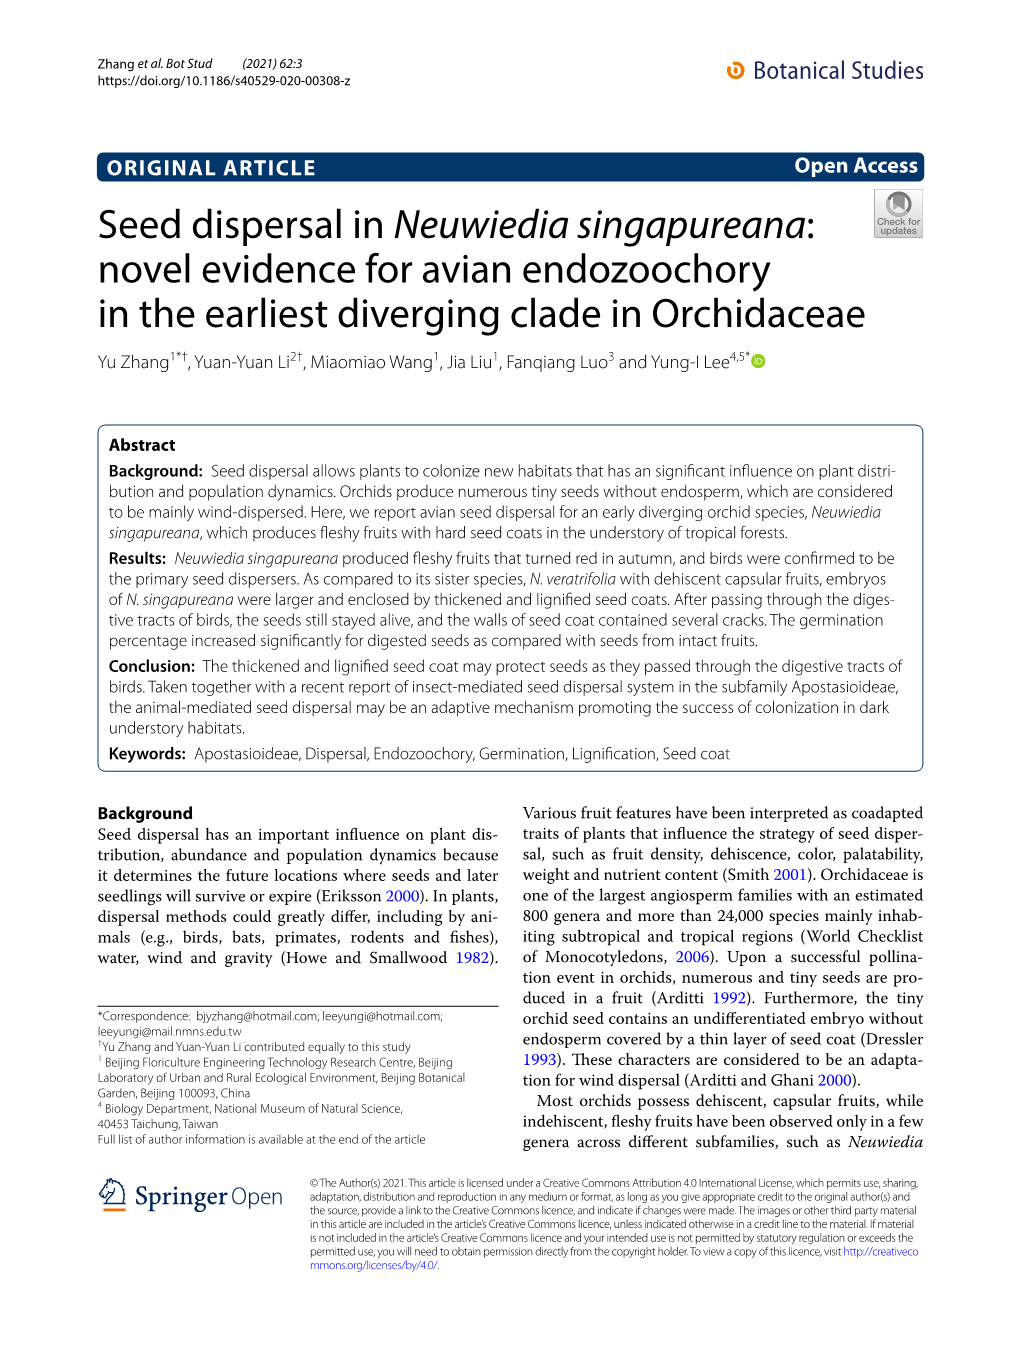 Seed Dispersal in Neuwiedia Singapureana: Novel Evidence For